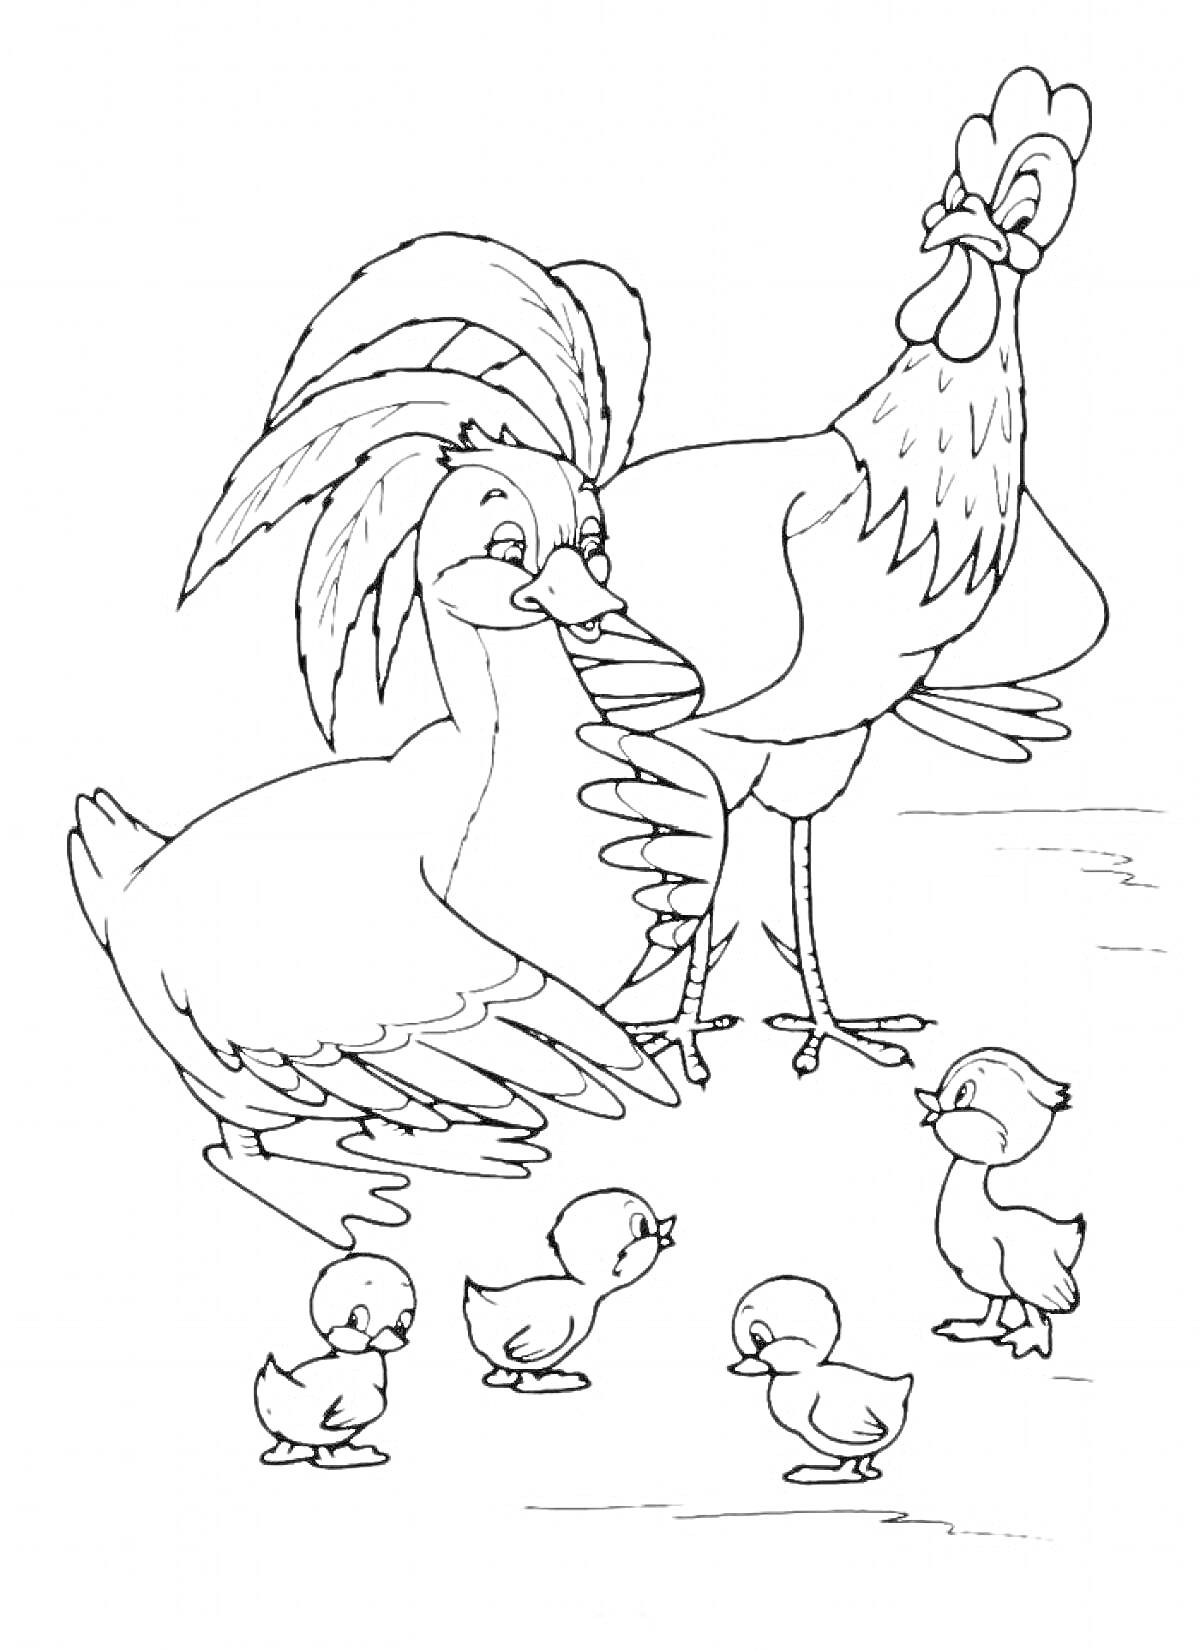 Петух, курица и пять цыплят